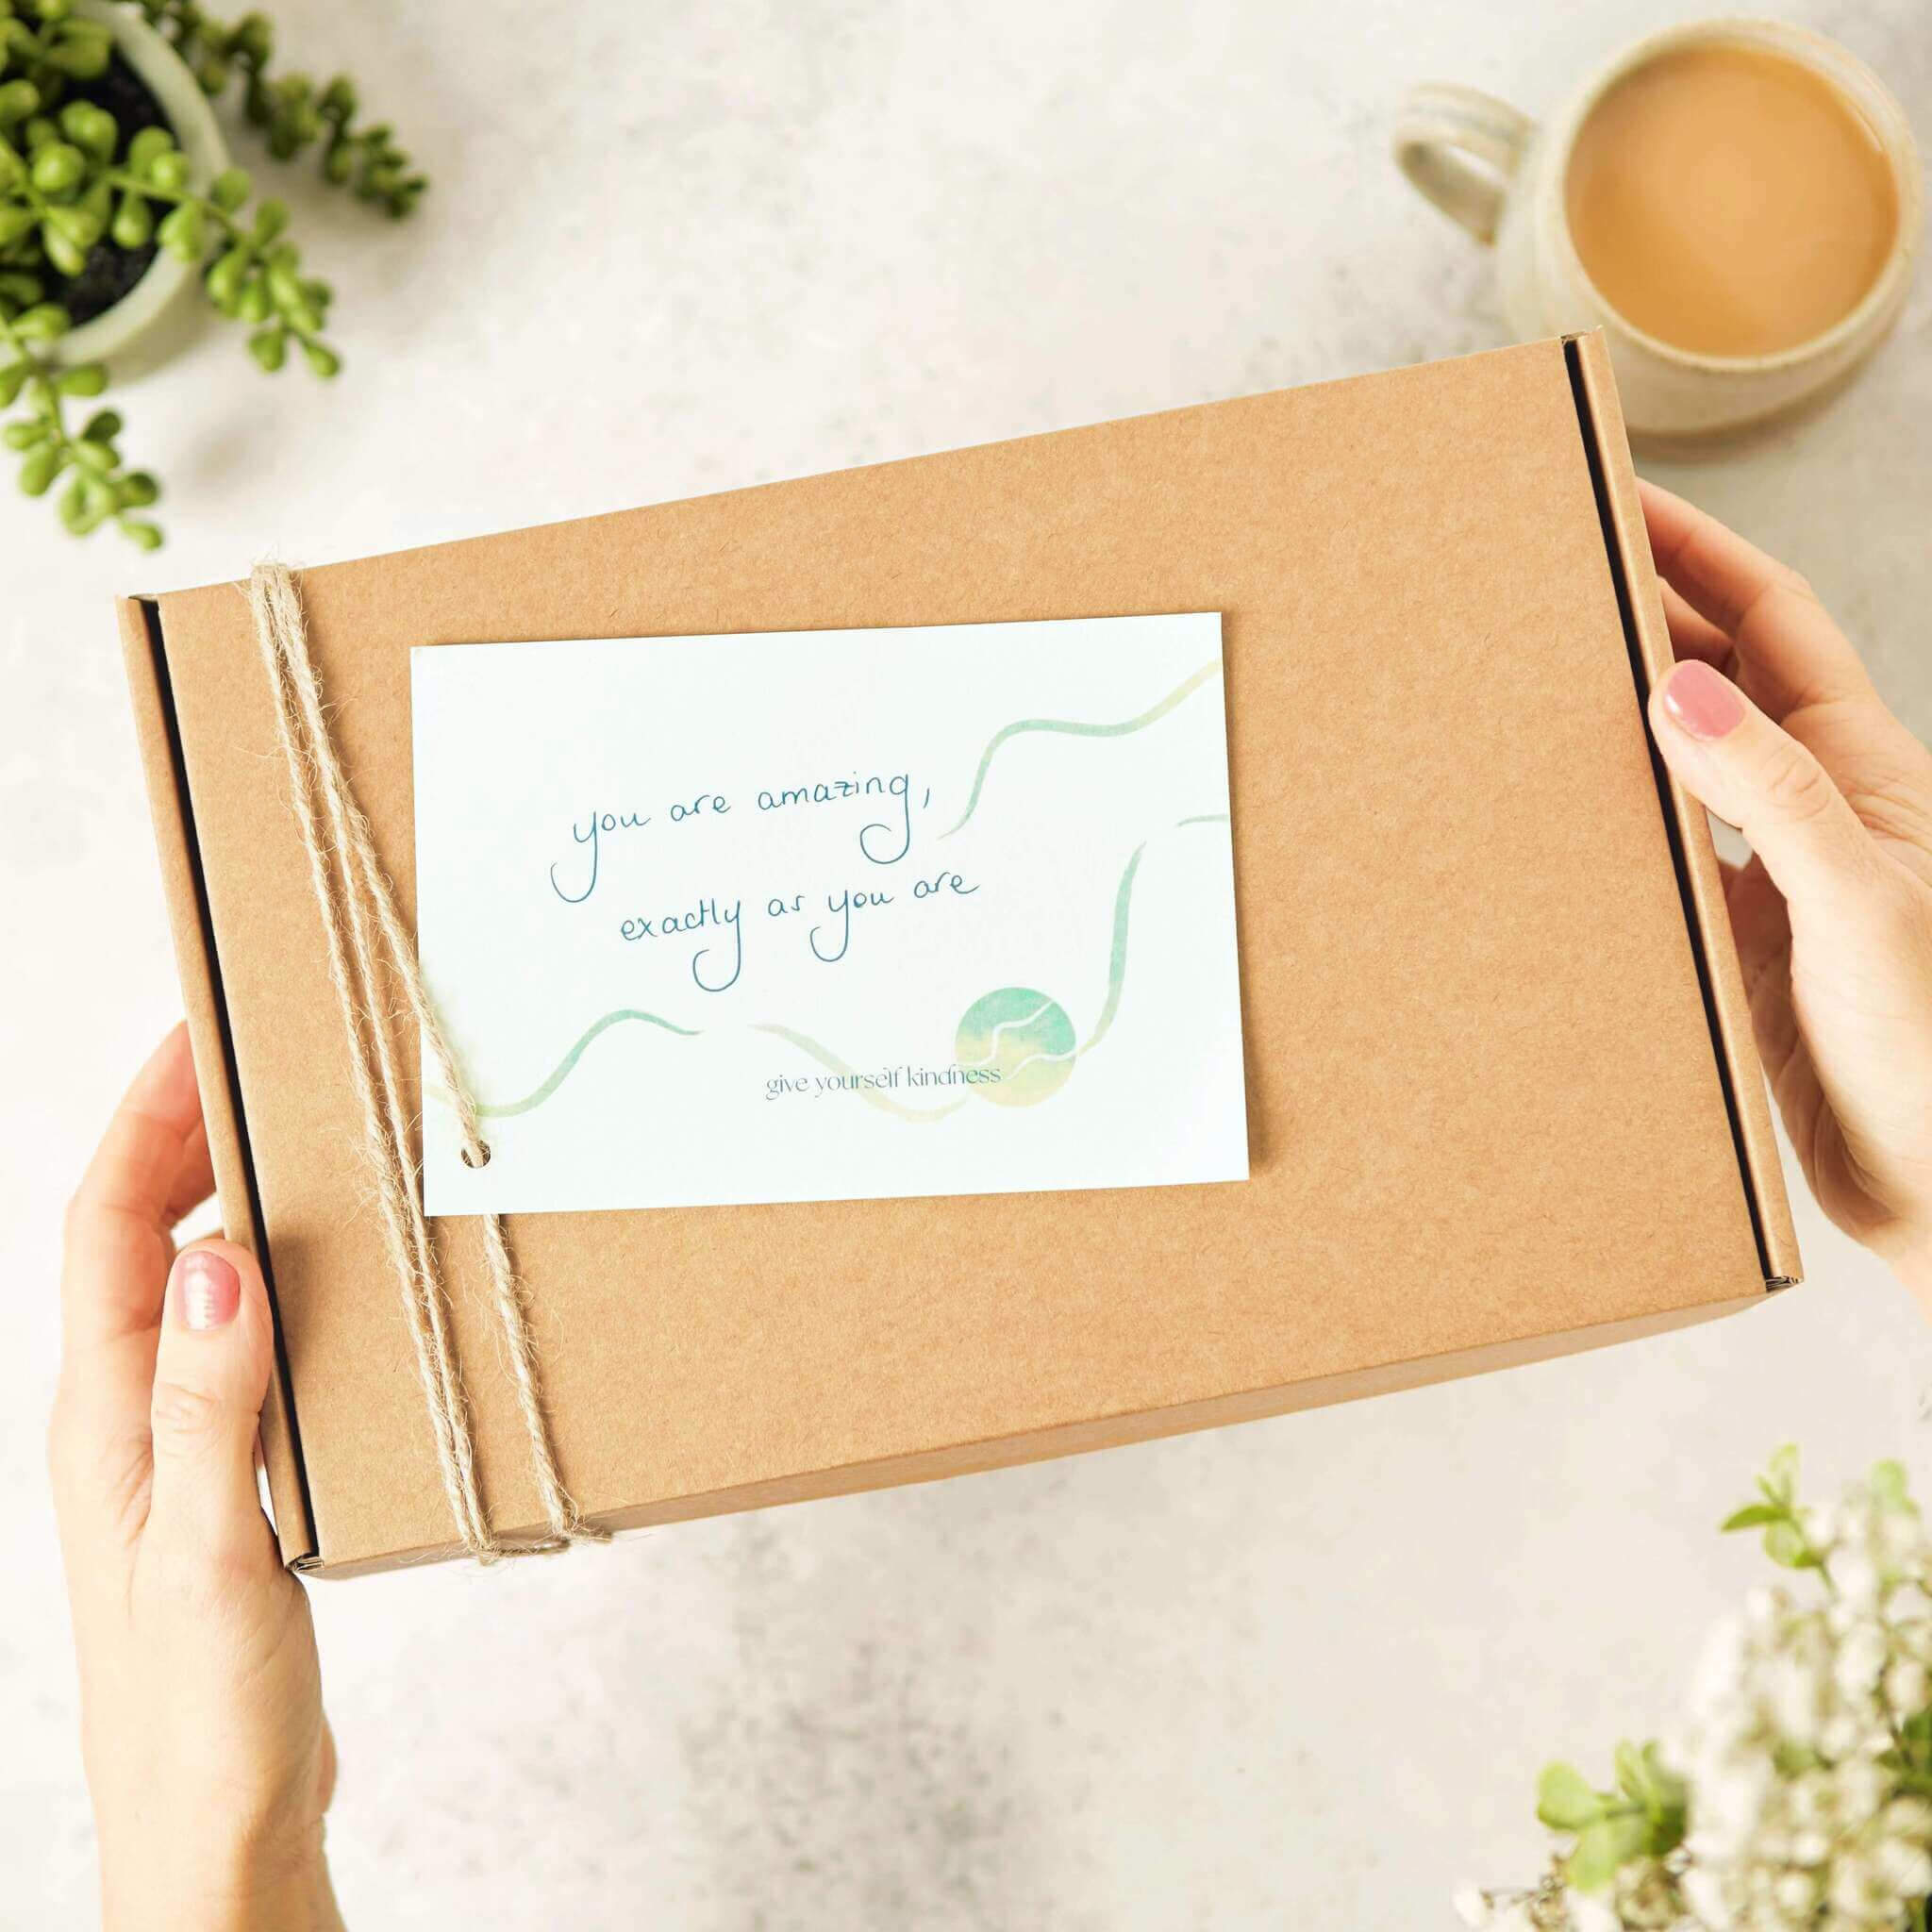 self-compassion gift box you are amazing